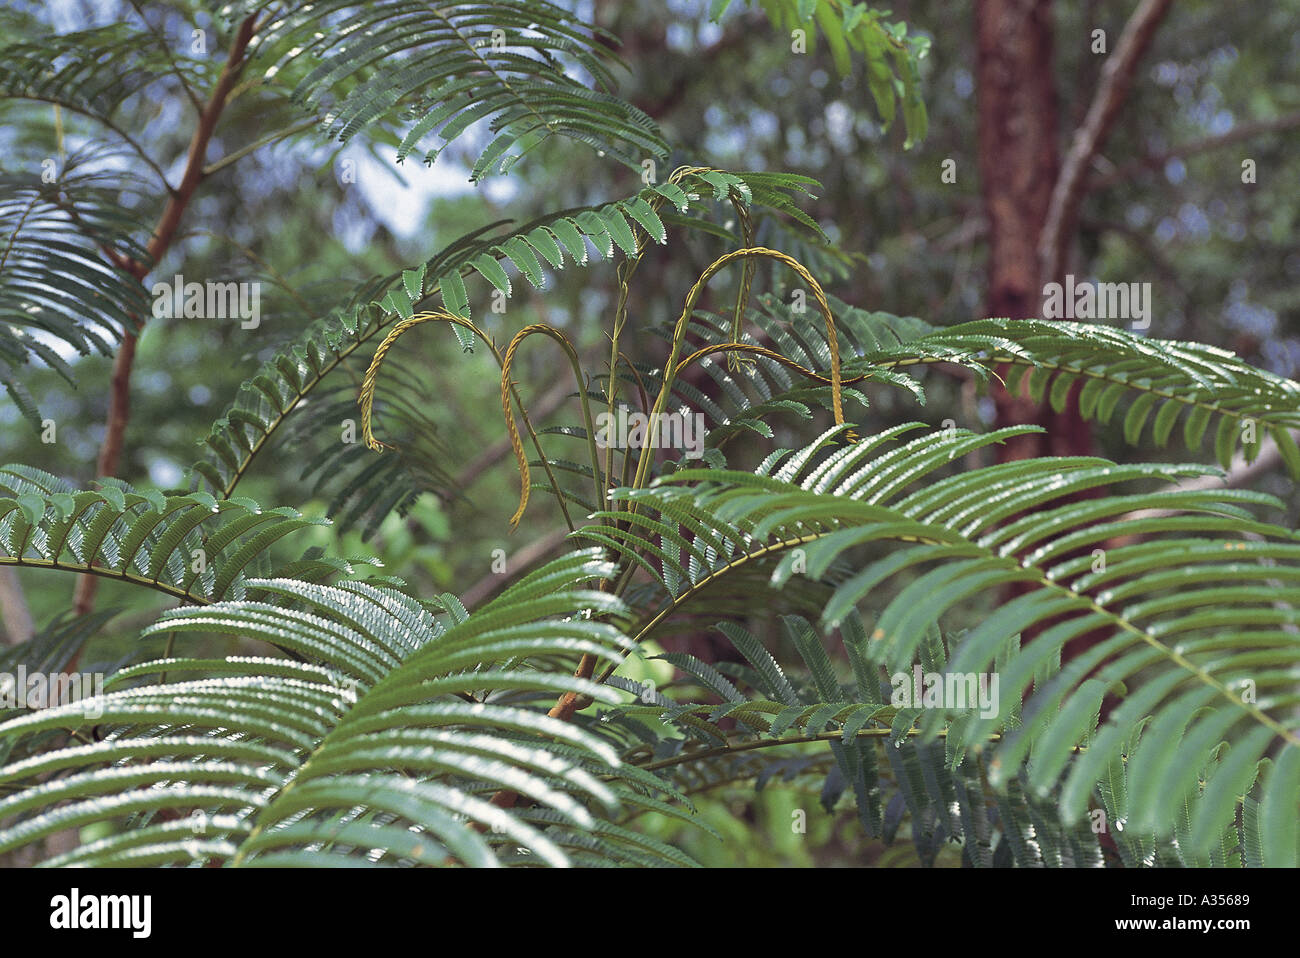 Trombetas Brasilien Farn-Pflanzen im Amazonas-Regenwald Para Zustand  Stockfotografie - Alamy